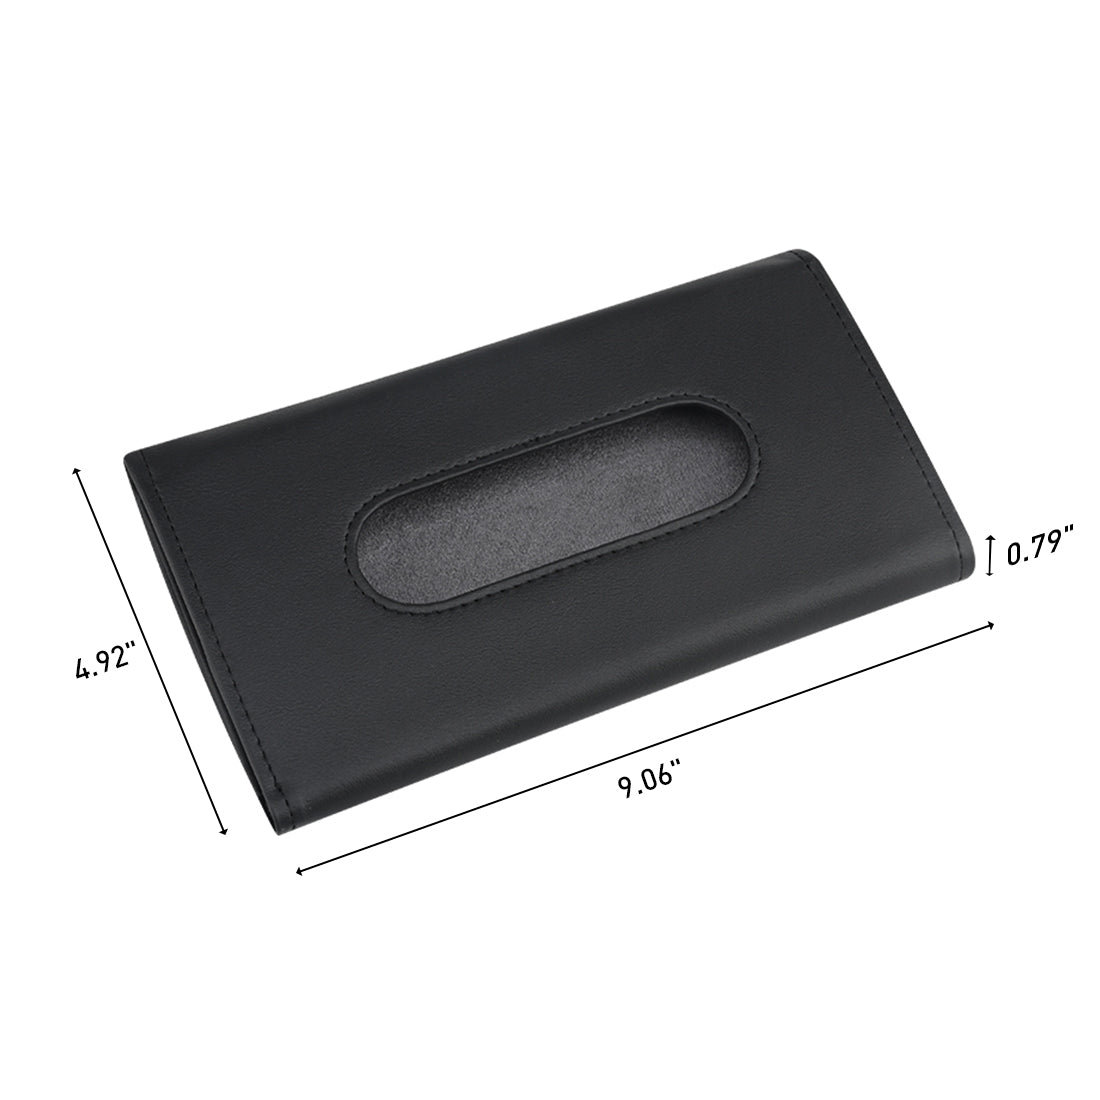 Tecfino Car Tissue Holder, PU Leather Tissue Box Cover Rectangular for Car, Car  Tissue Box Holder for Car Backseat, Tissue Holder for Car Organization  Accessories, 9.5'' x 3.9'' x 5.5'' (Black) 